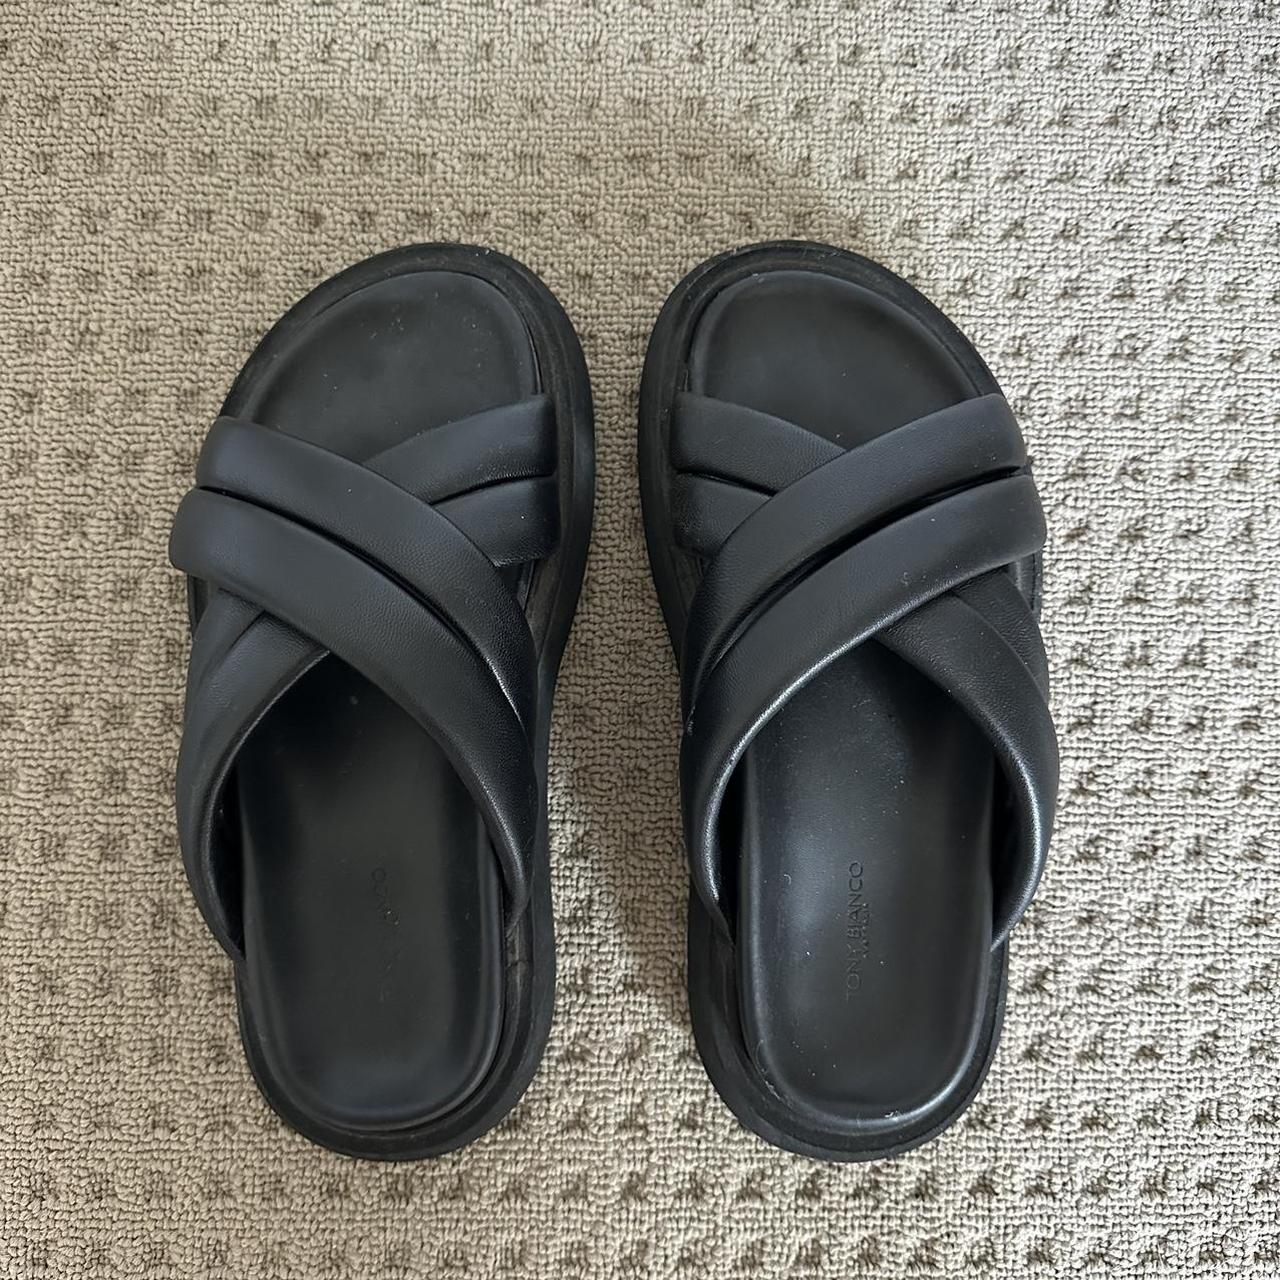 Tony and Bianco Sandals Size 6 - Depop